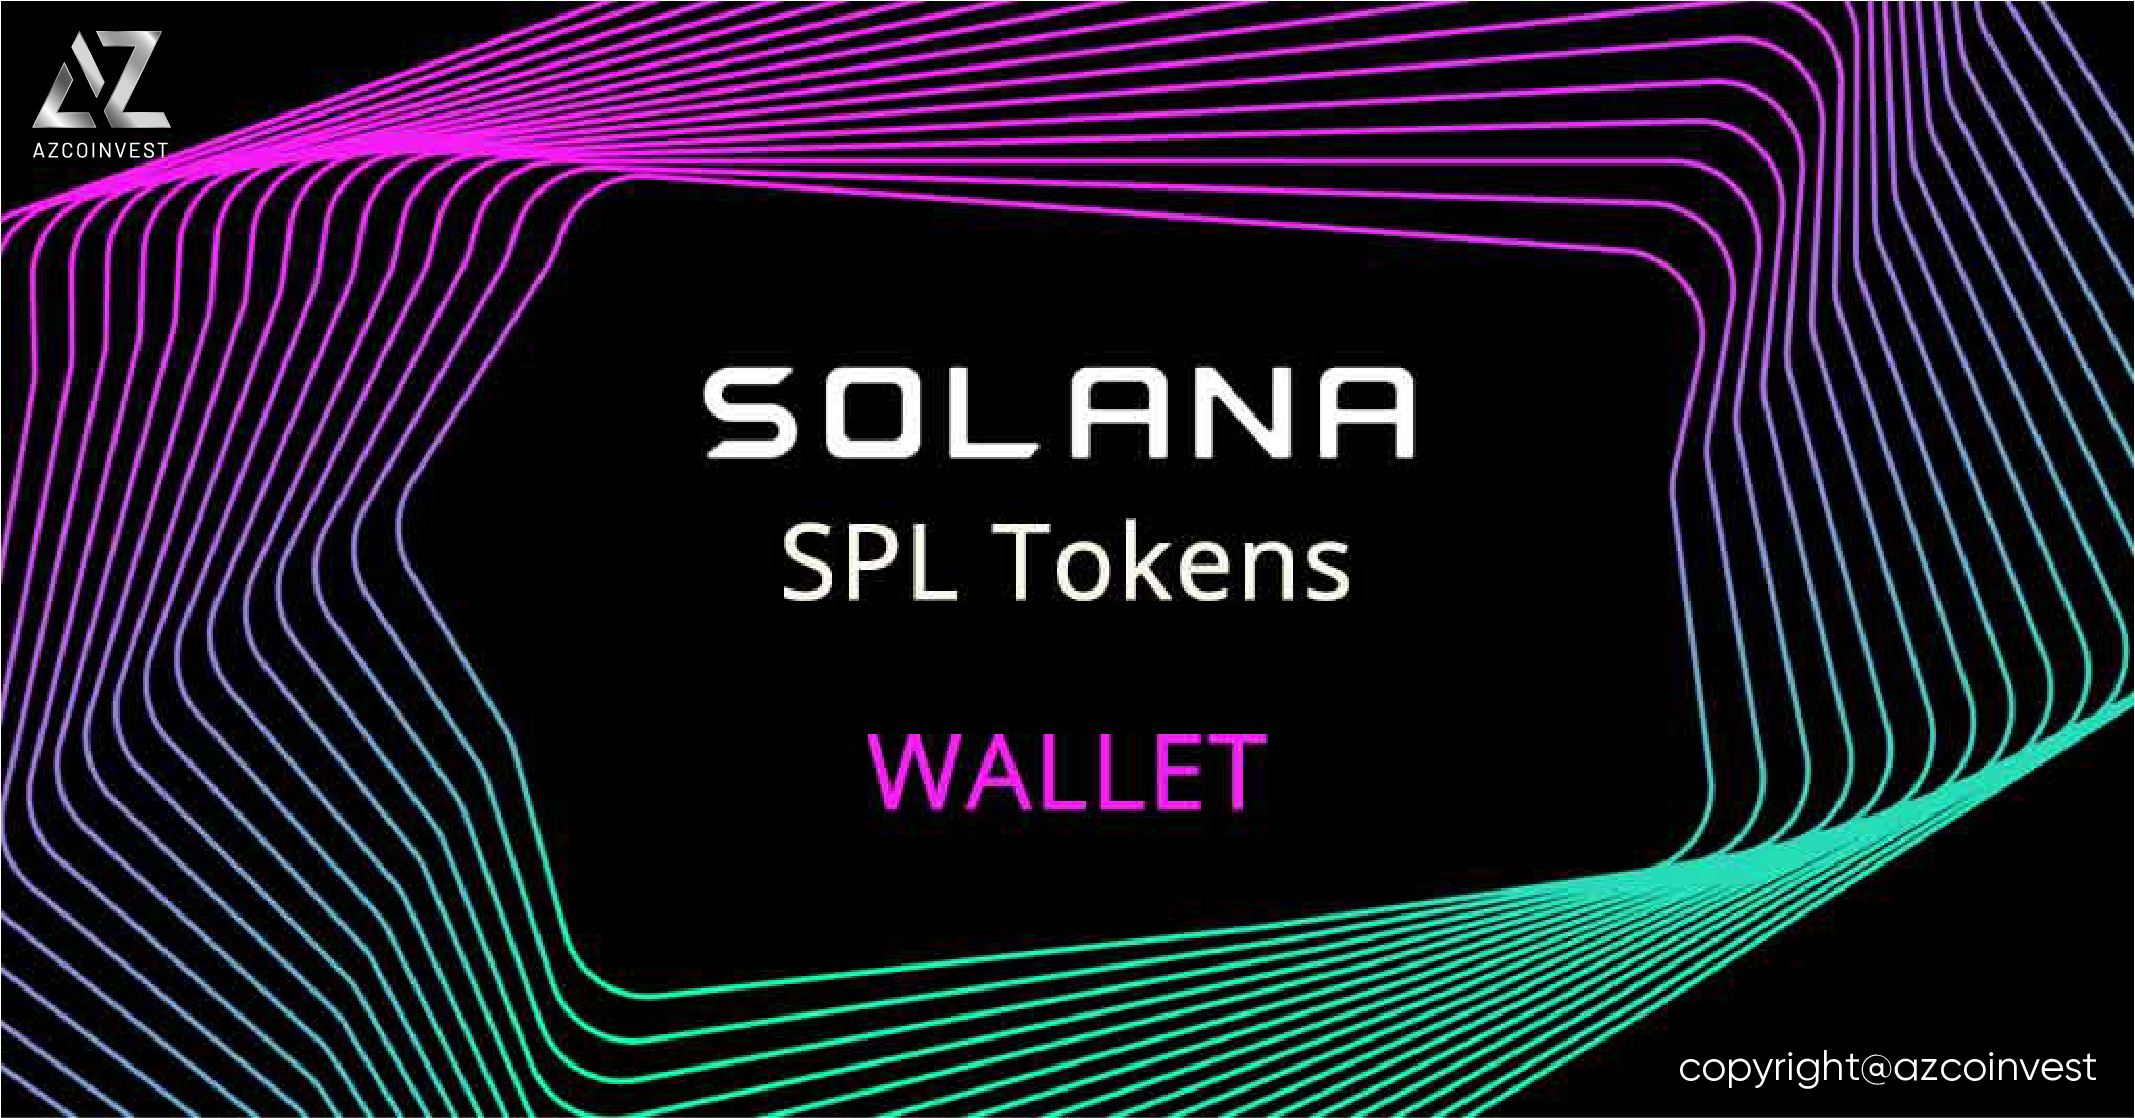 Solana Wallet